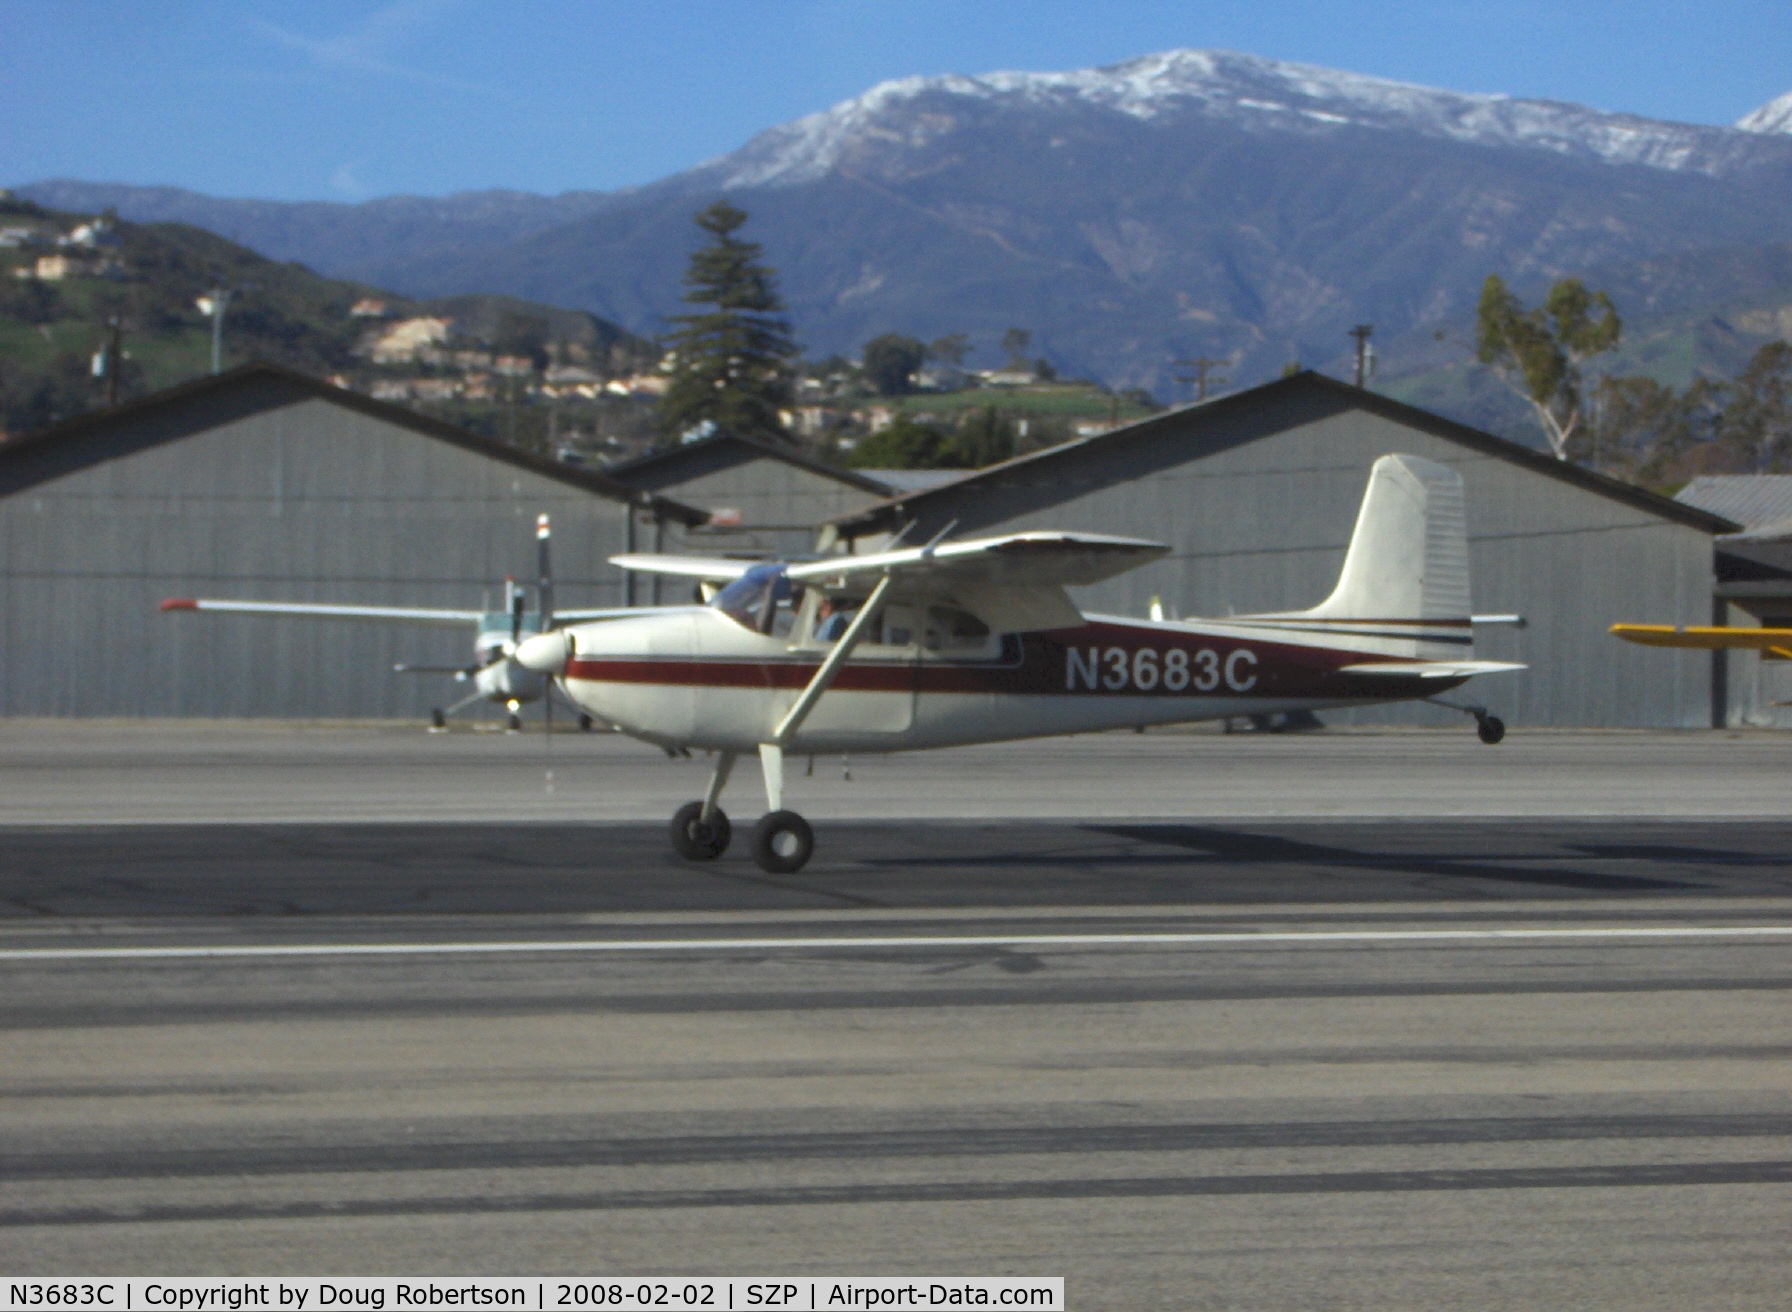 N3683C, 1954 Cessna 180 C/N 31182, 1954 Cessna 180, Continental O-470 225 Hp, landing Rwy 22